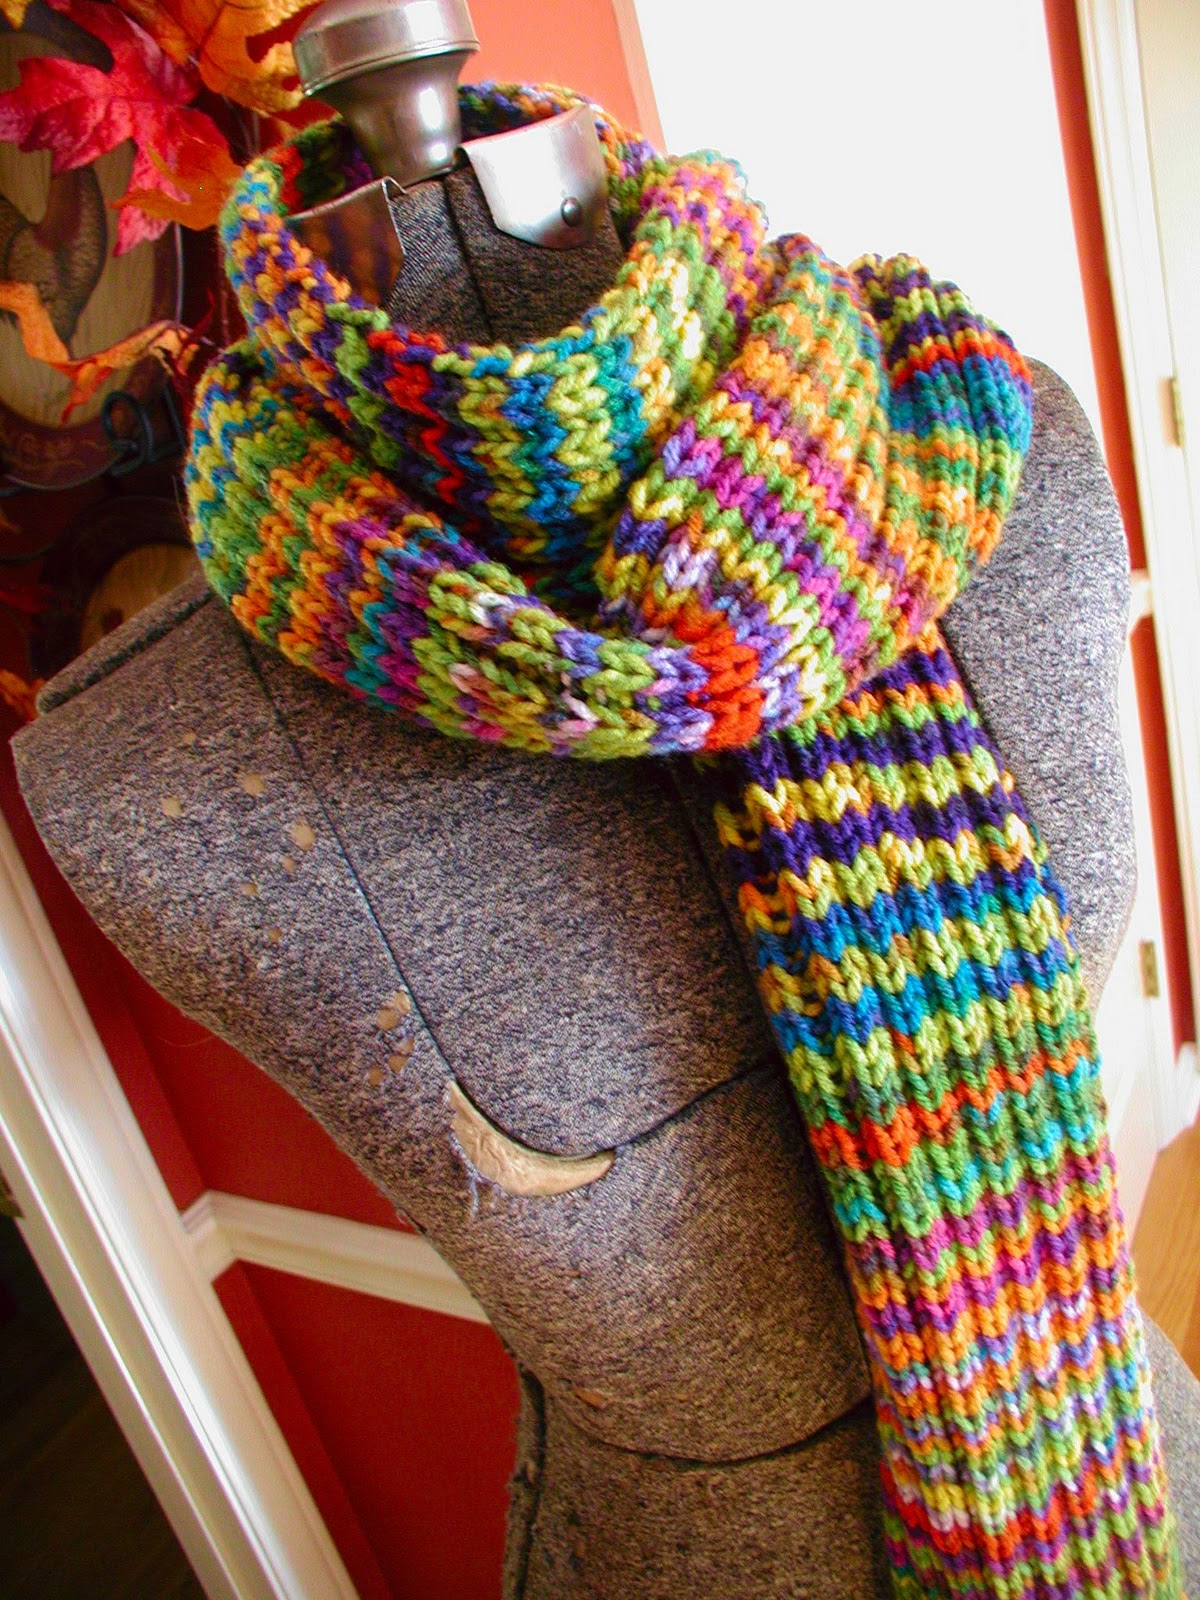 Variegated Yarn Patterns Knitting Fiddlesticks My Crochet And Knitting Ramblings The Technicolor